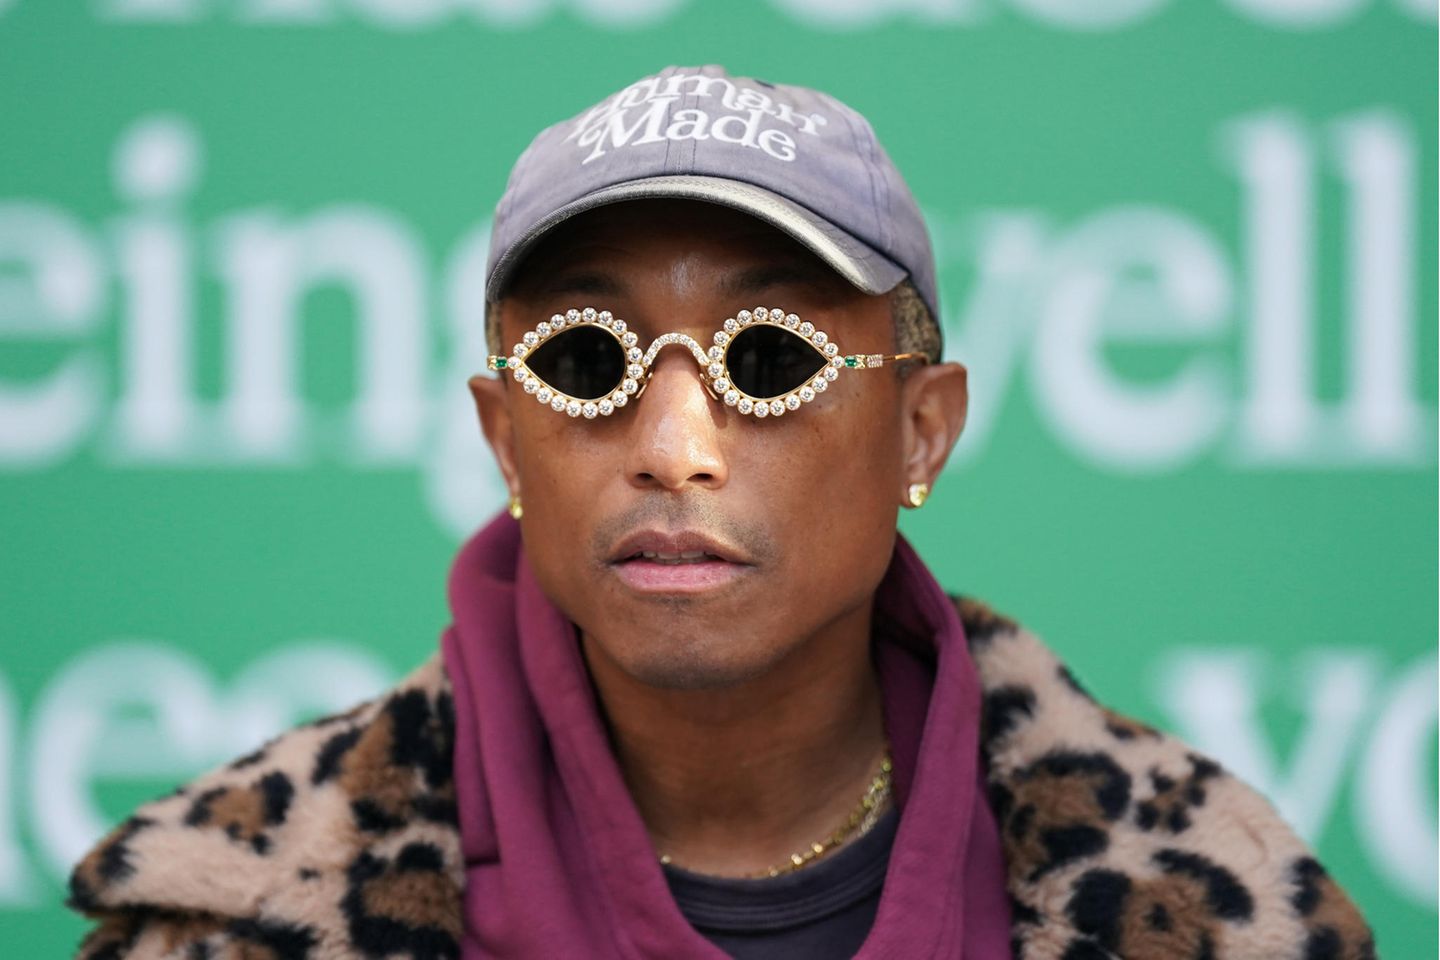 Pharrell Williams ist bereits Profi, was Kollaborationen angeht. Jetzt wird er neuer Creative Director für Männermode bei Louis Vuitton